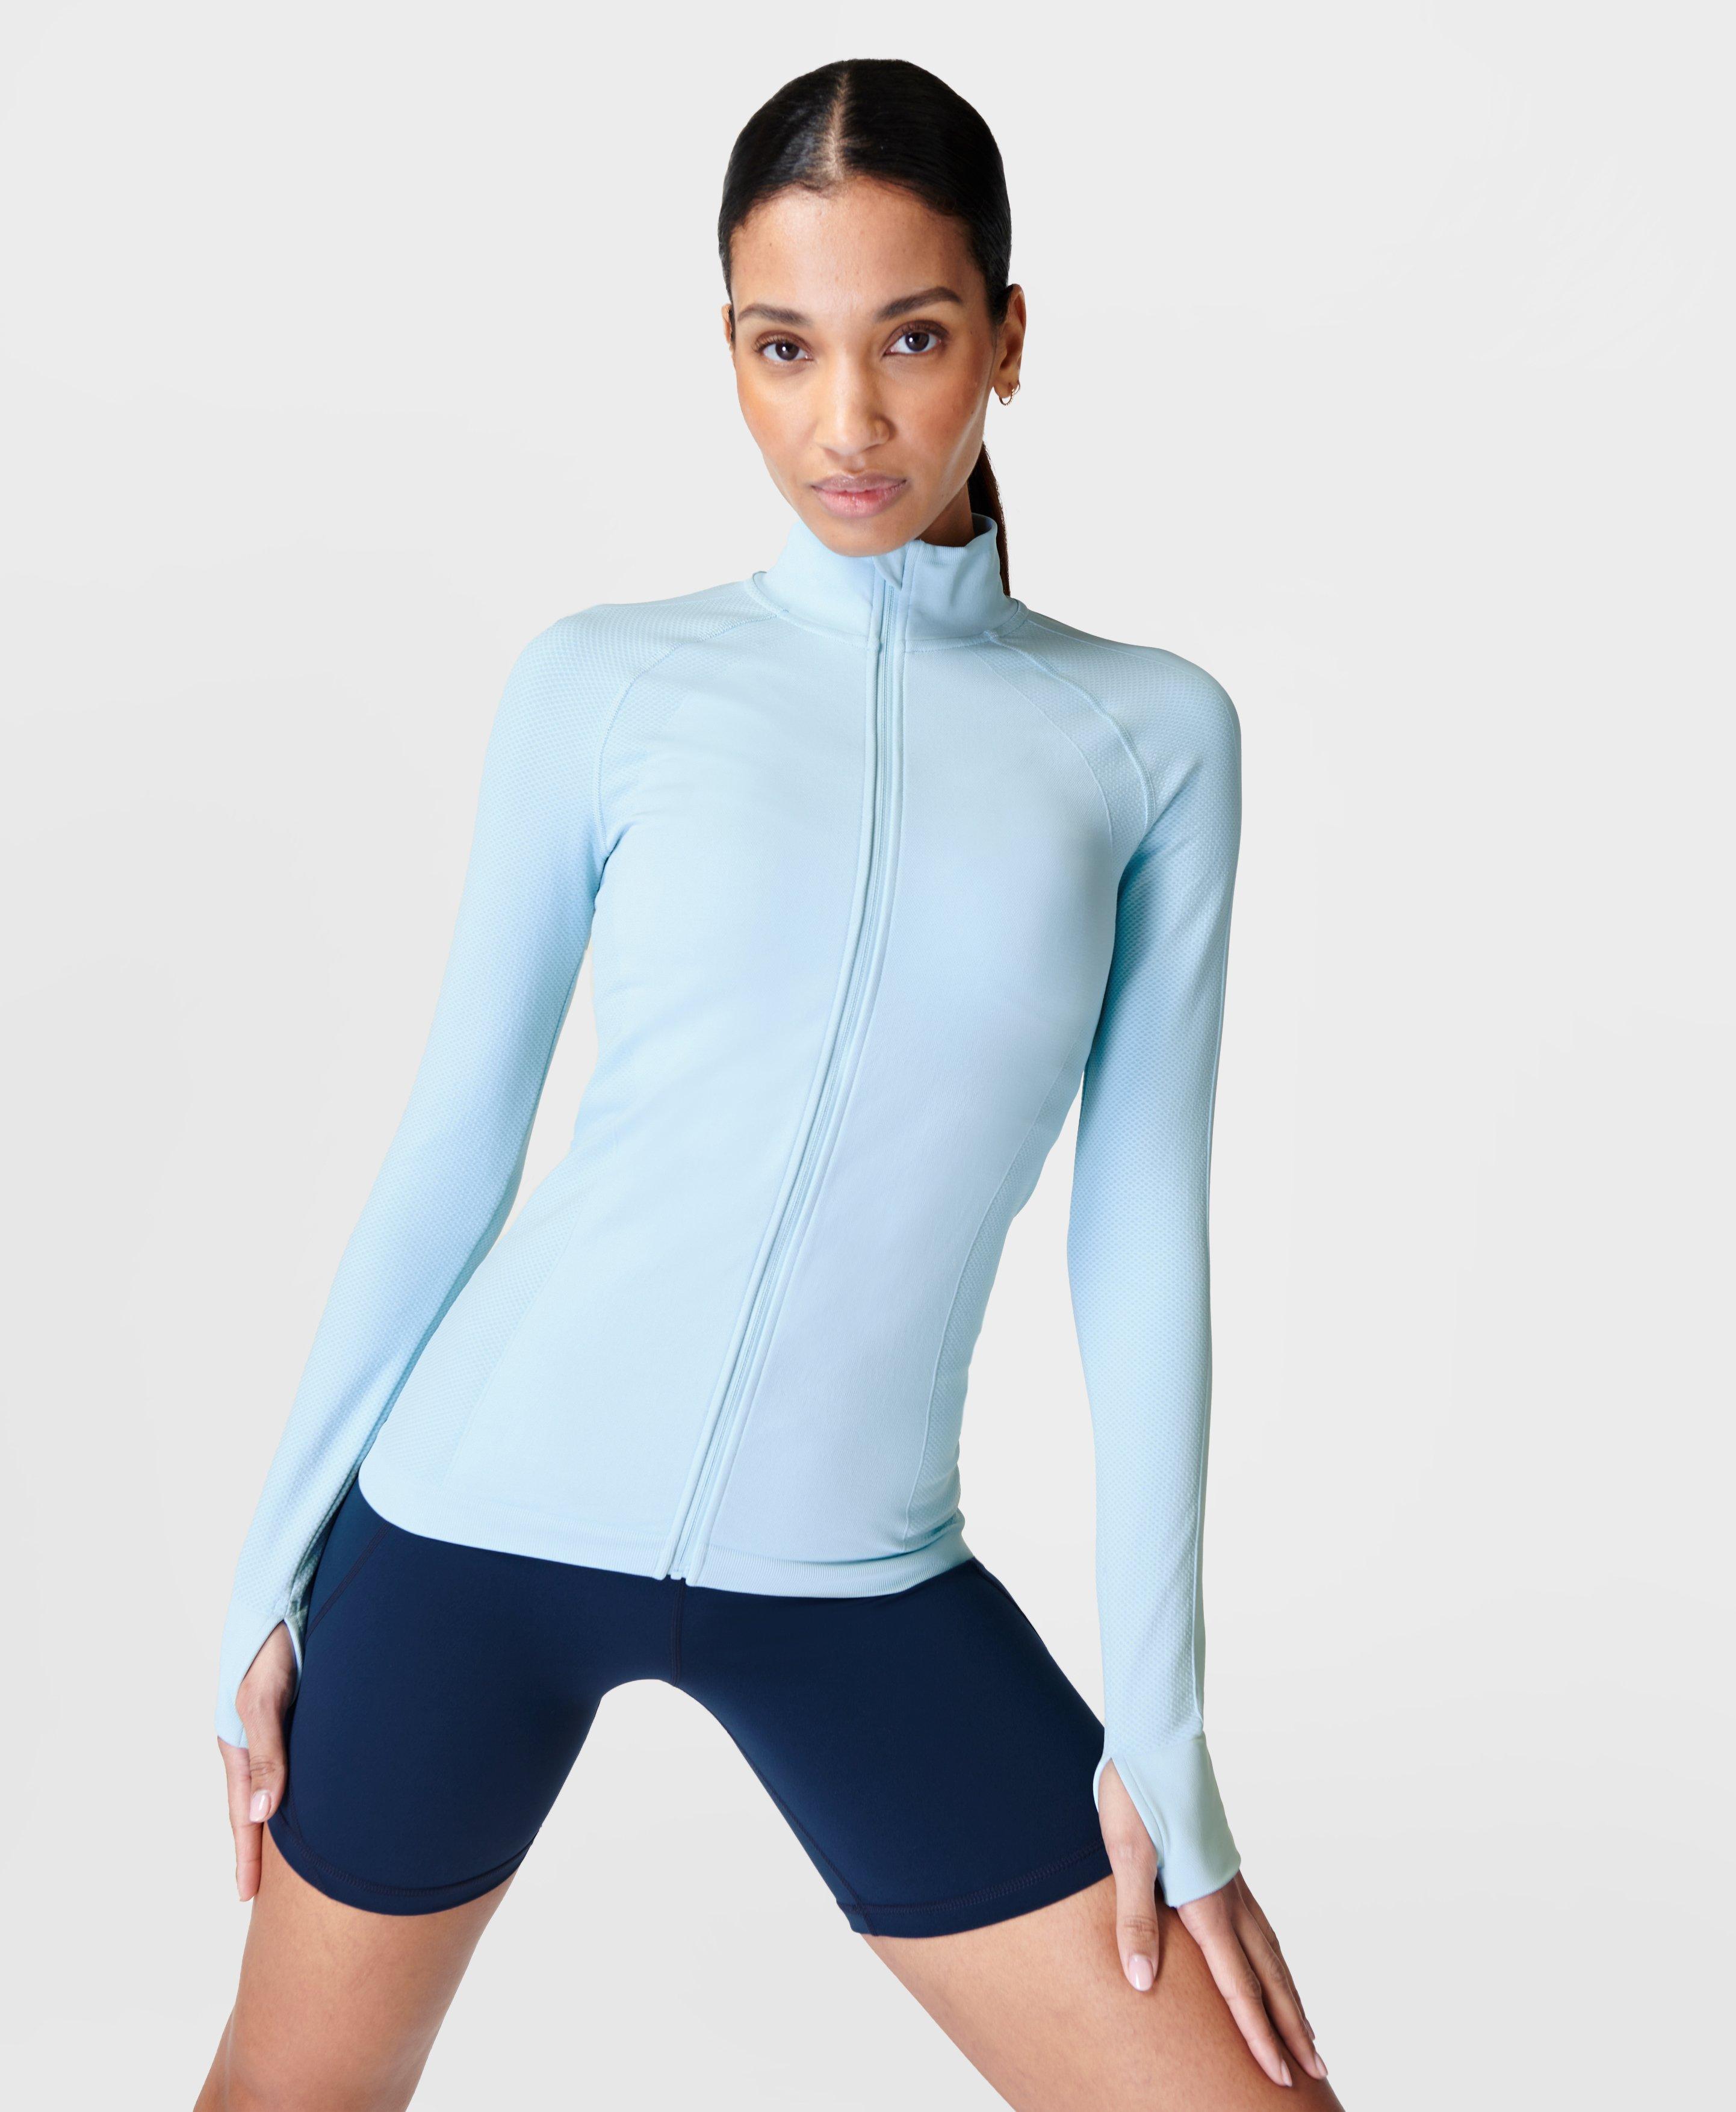 Women's Hoodies & Sweatshirts | Gym Tops | Sweaty Betty